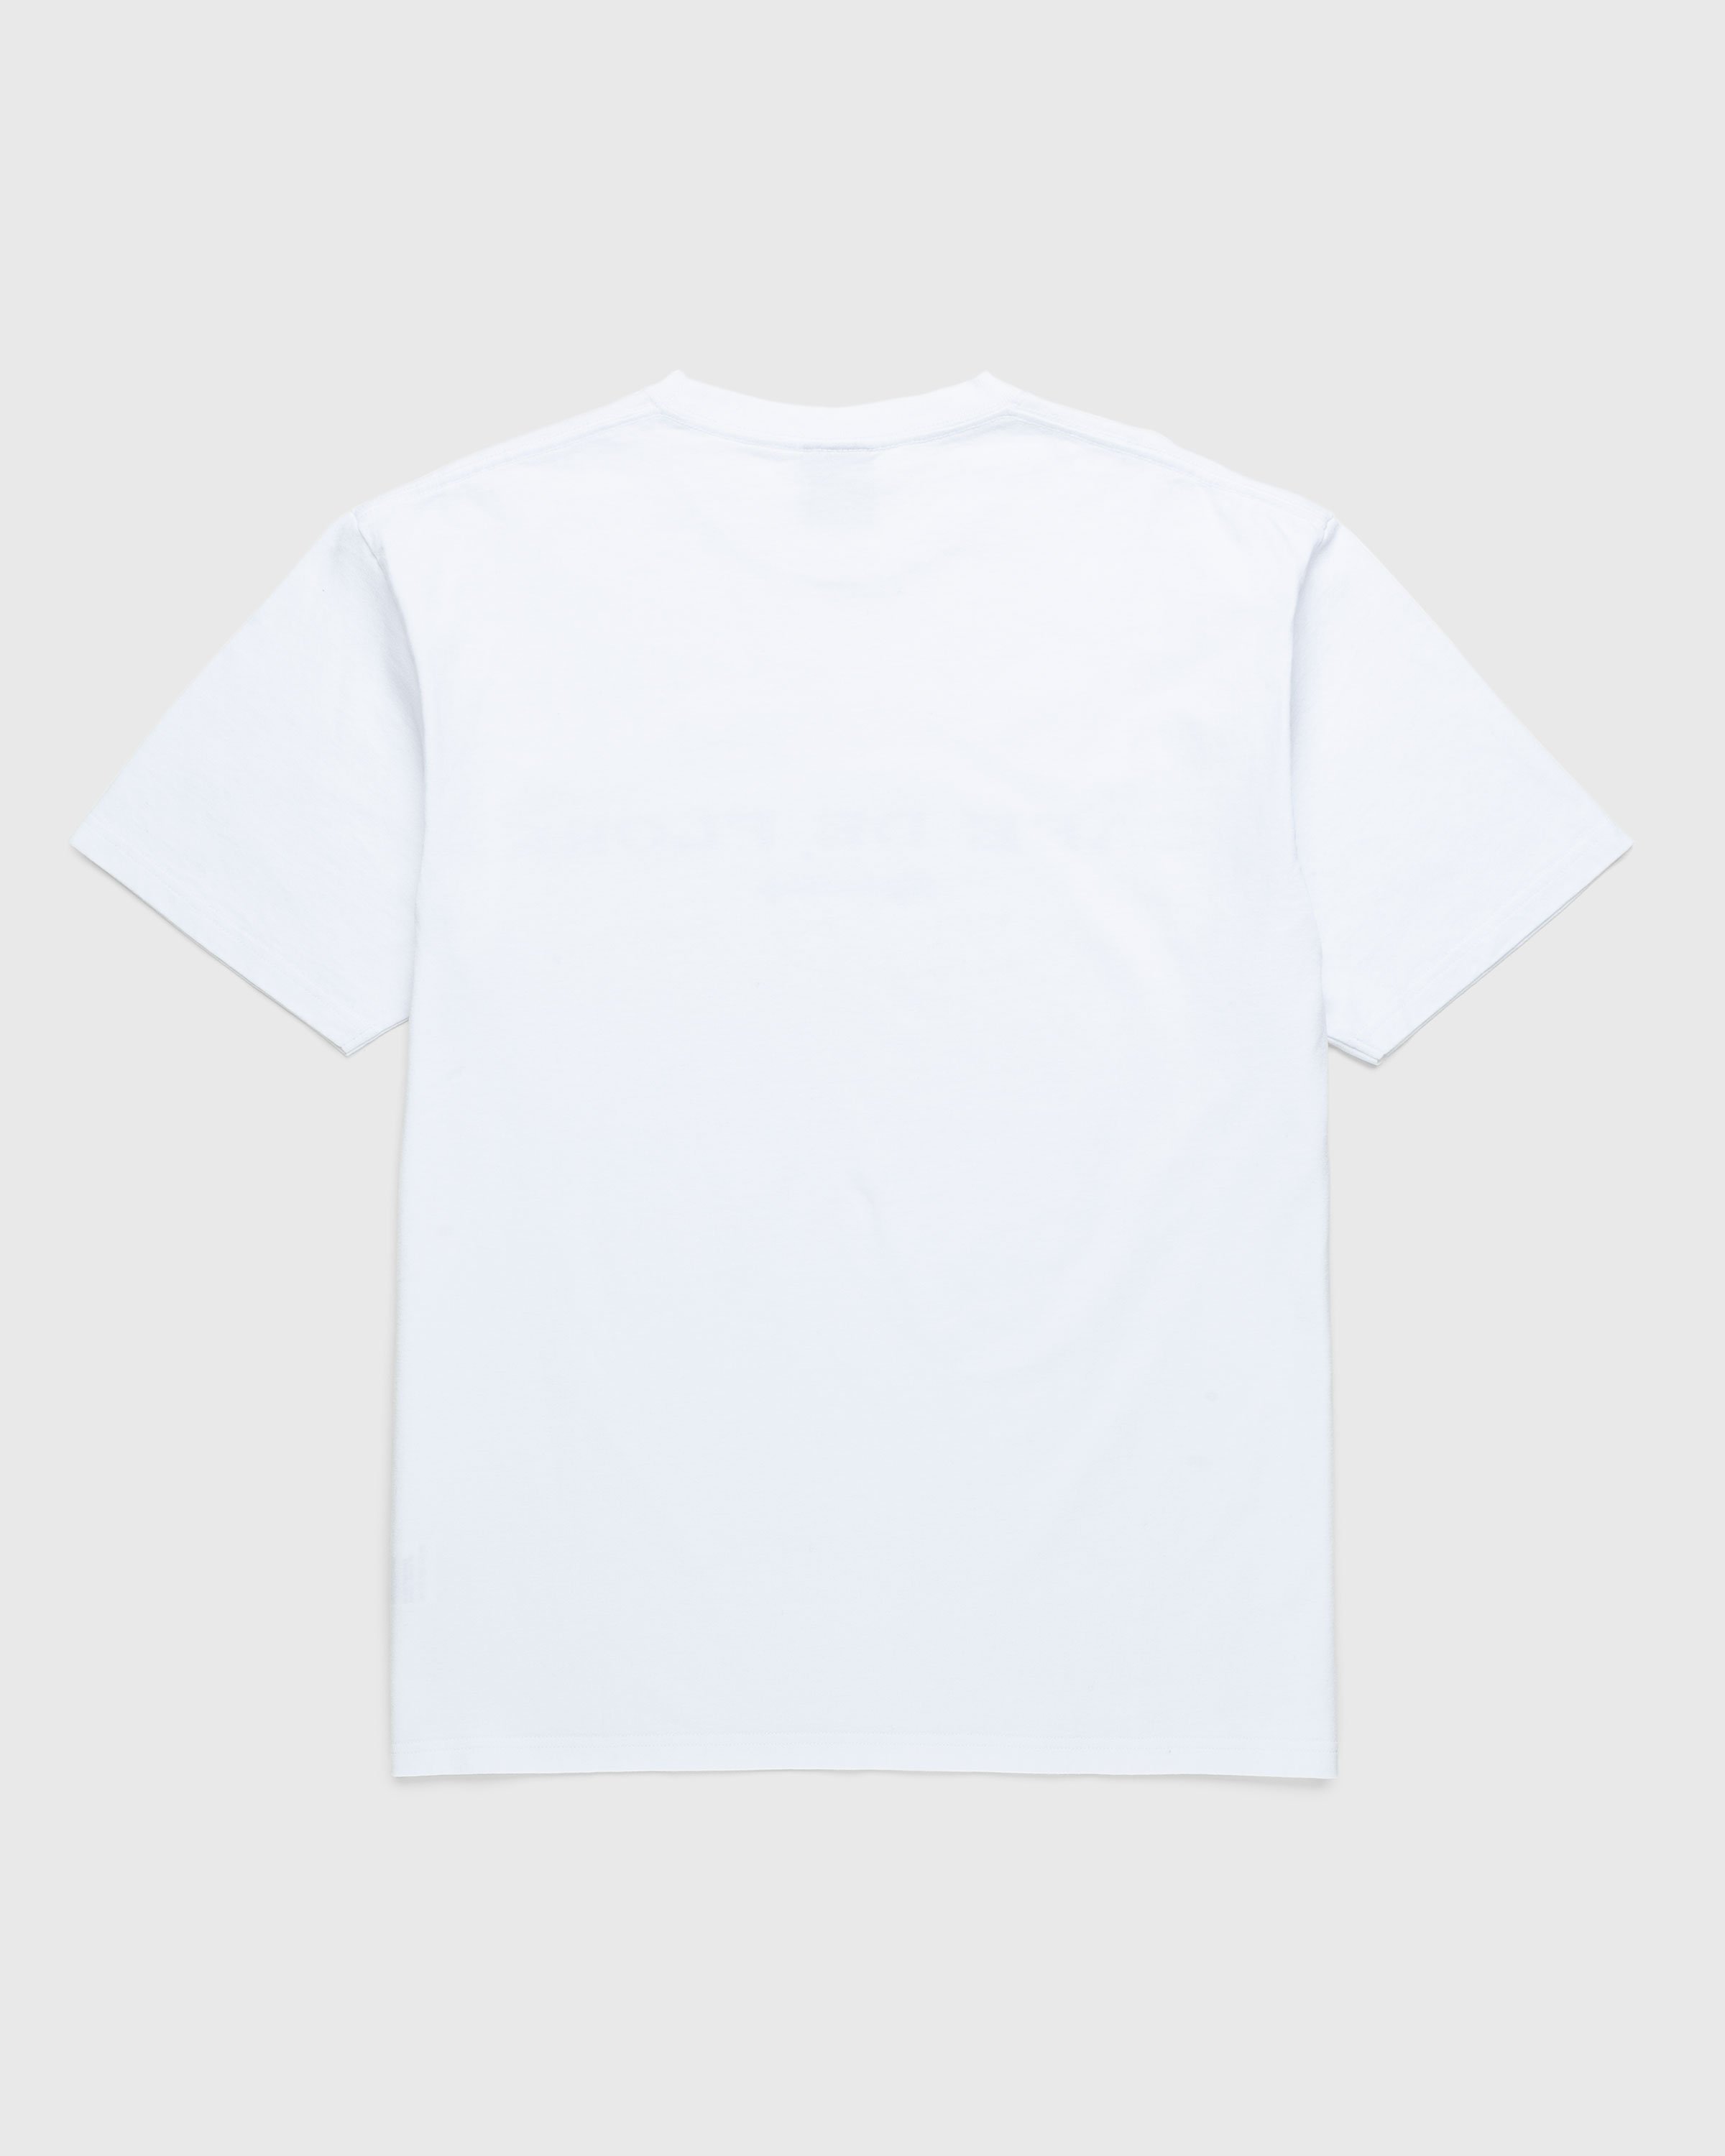 Café de Flore x Highsnobiety - Short Sleeve T-Shirt White - Clothing - White - Image 2